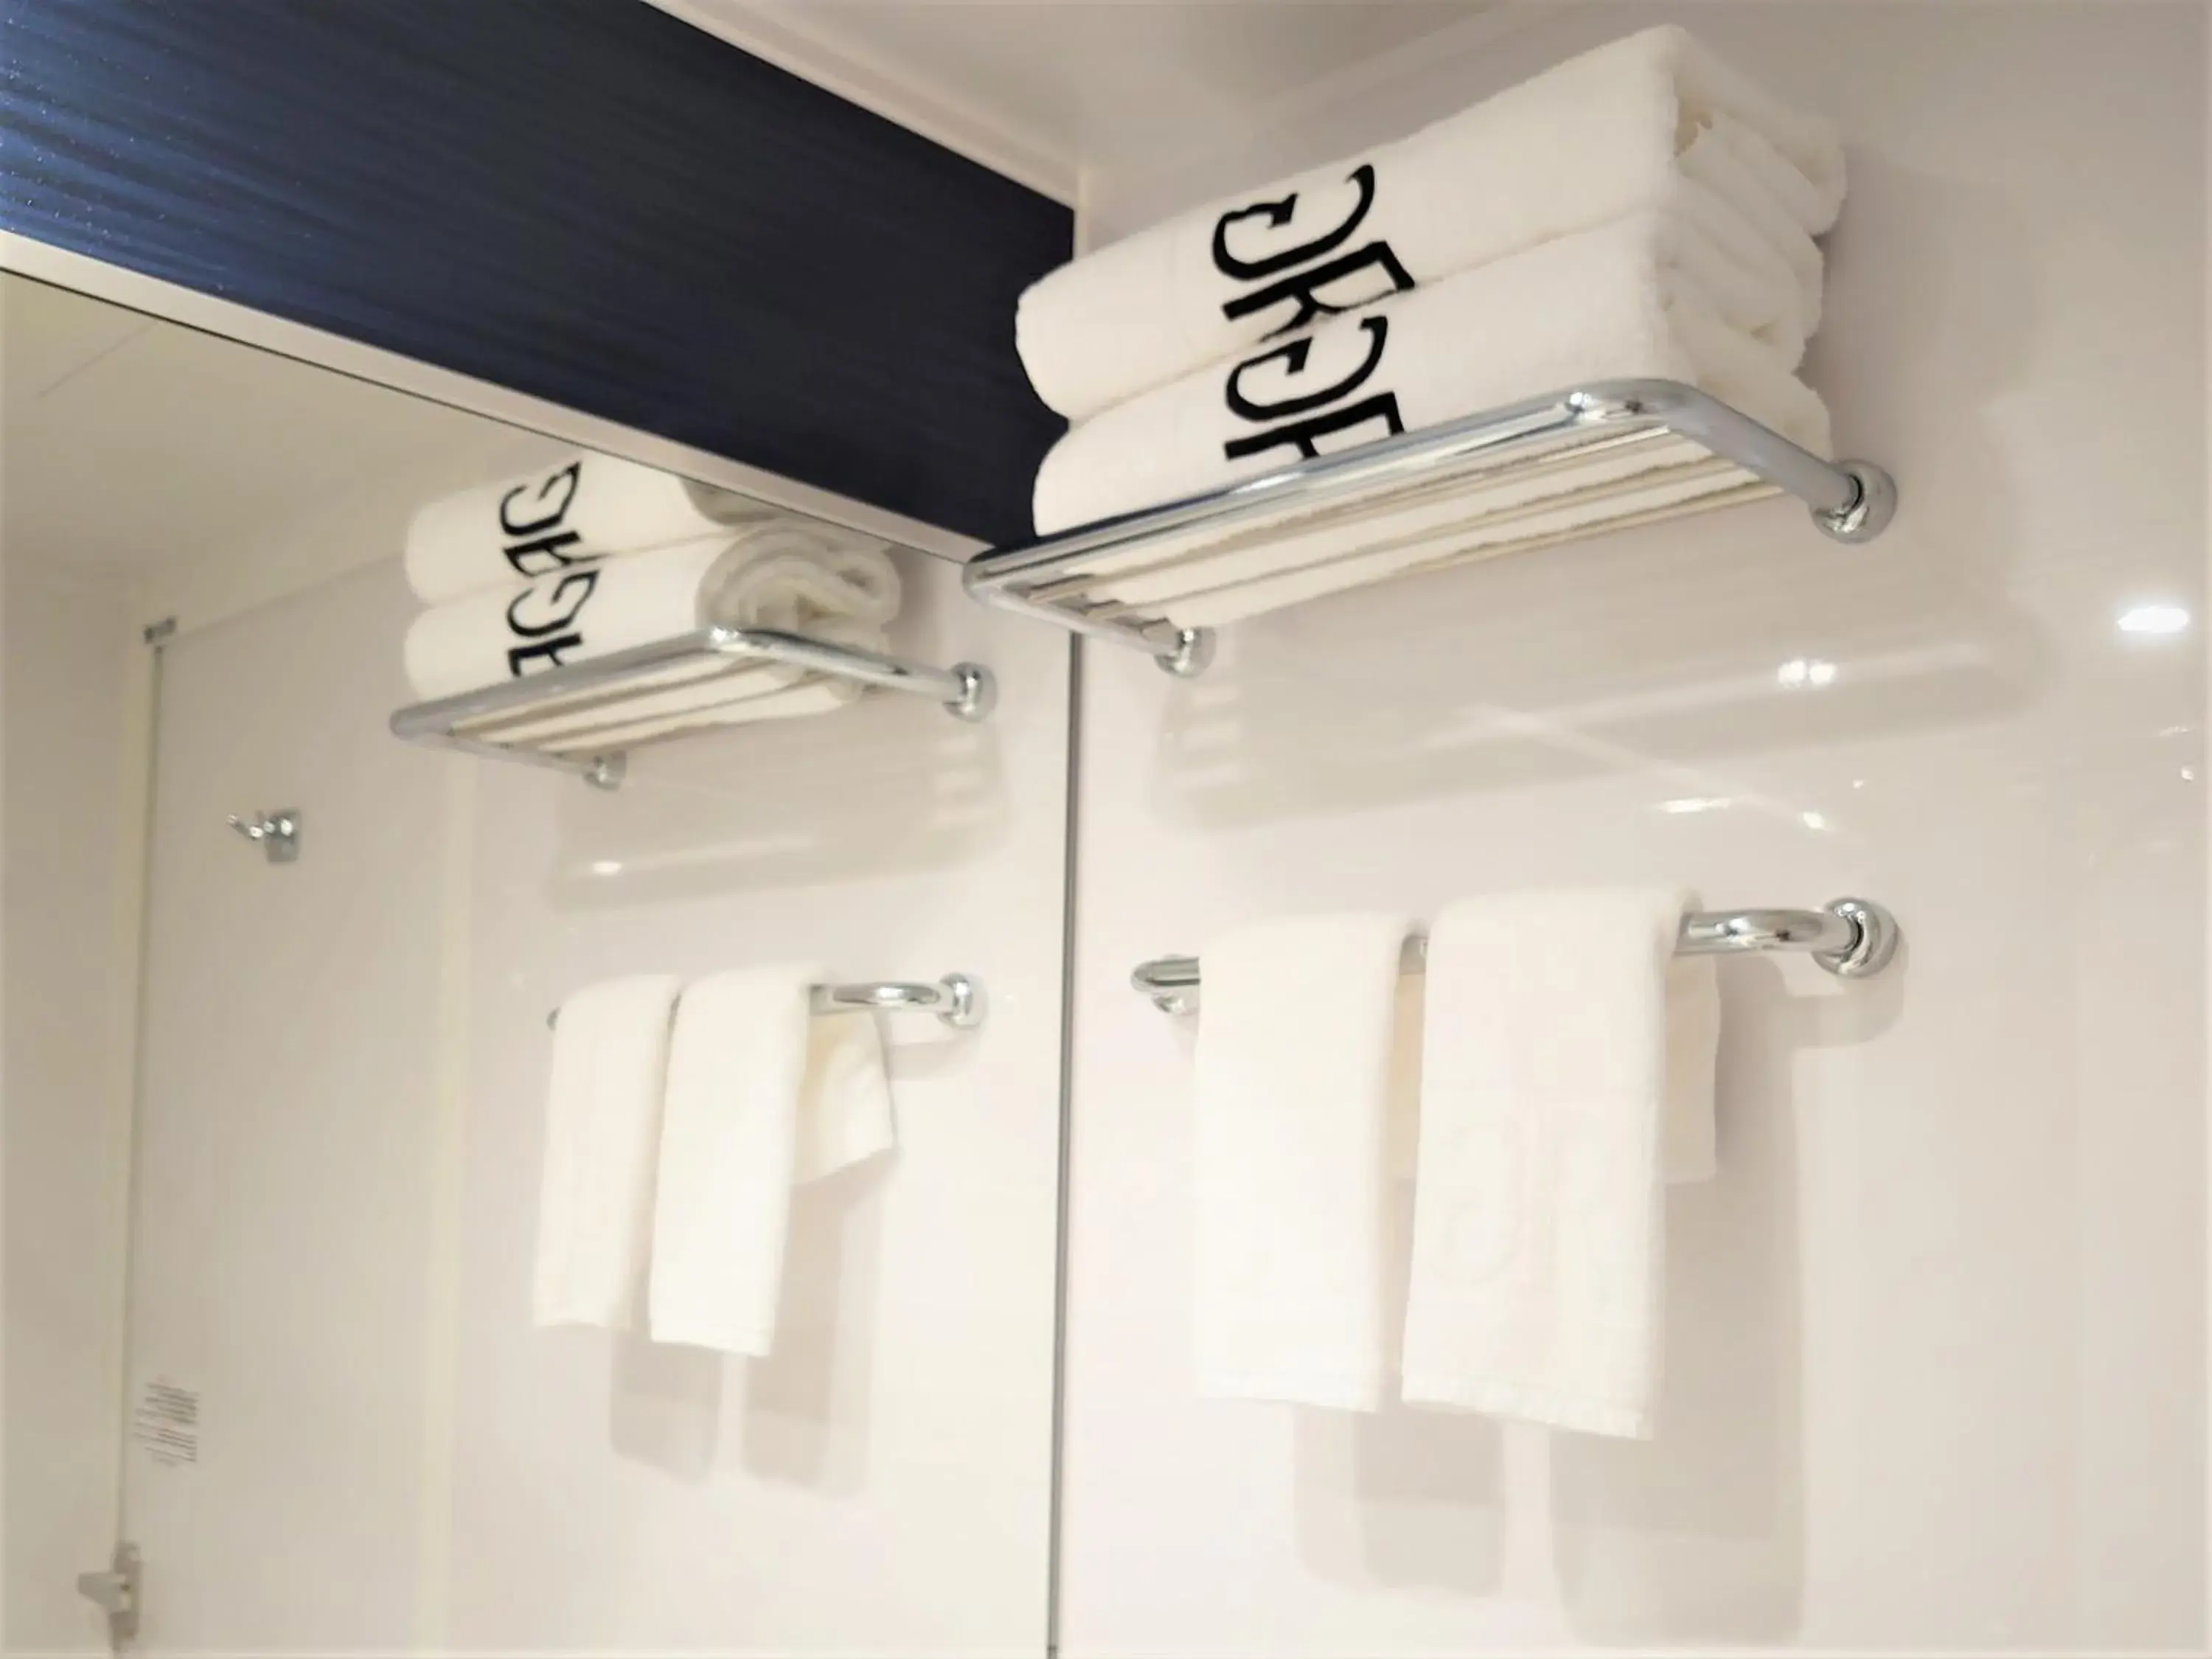 Bathroom in Green Rich Hotel Naha -Hotel & Capsule- Artificial hot spring Futamata Yunohana